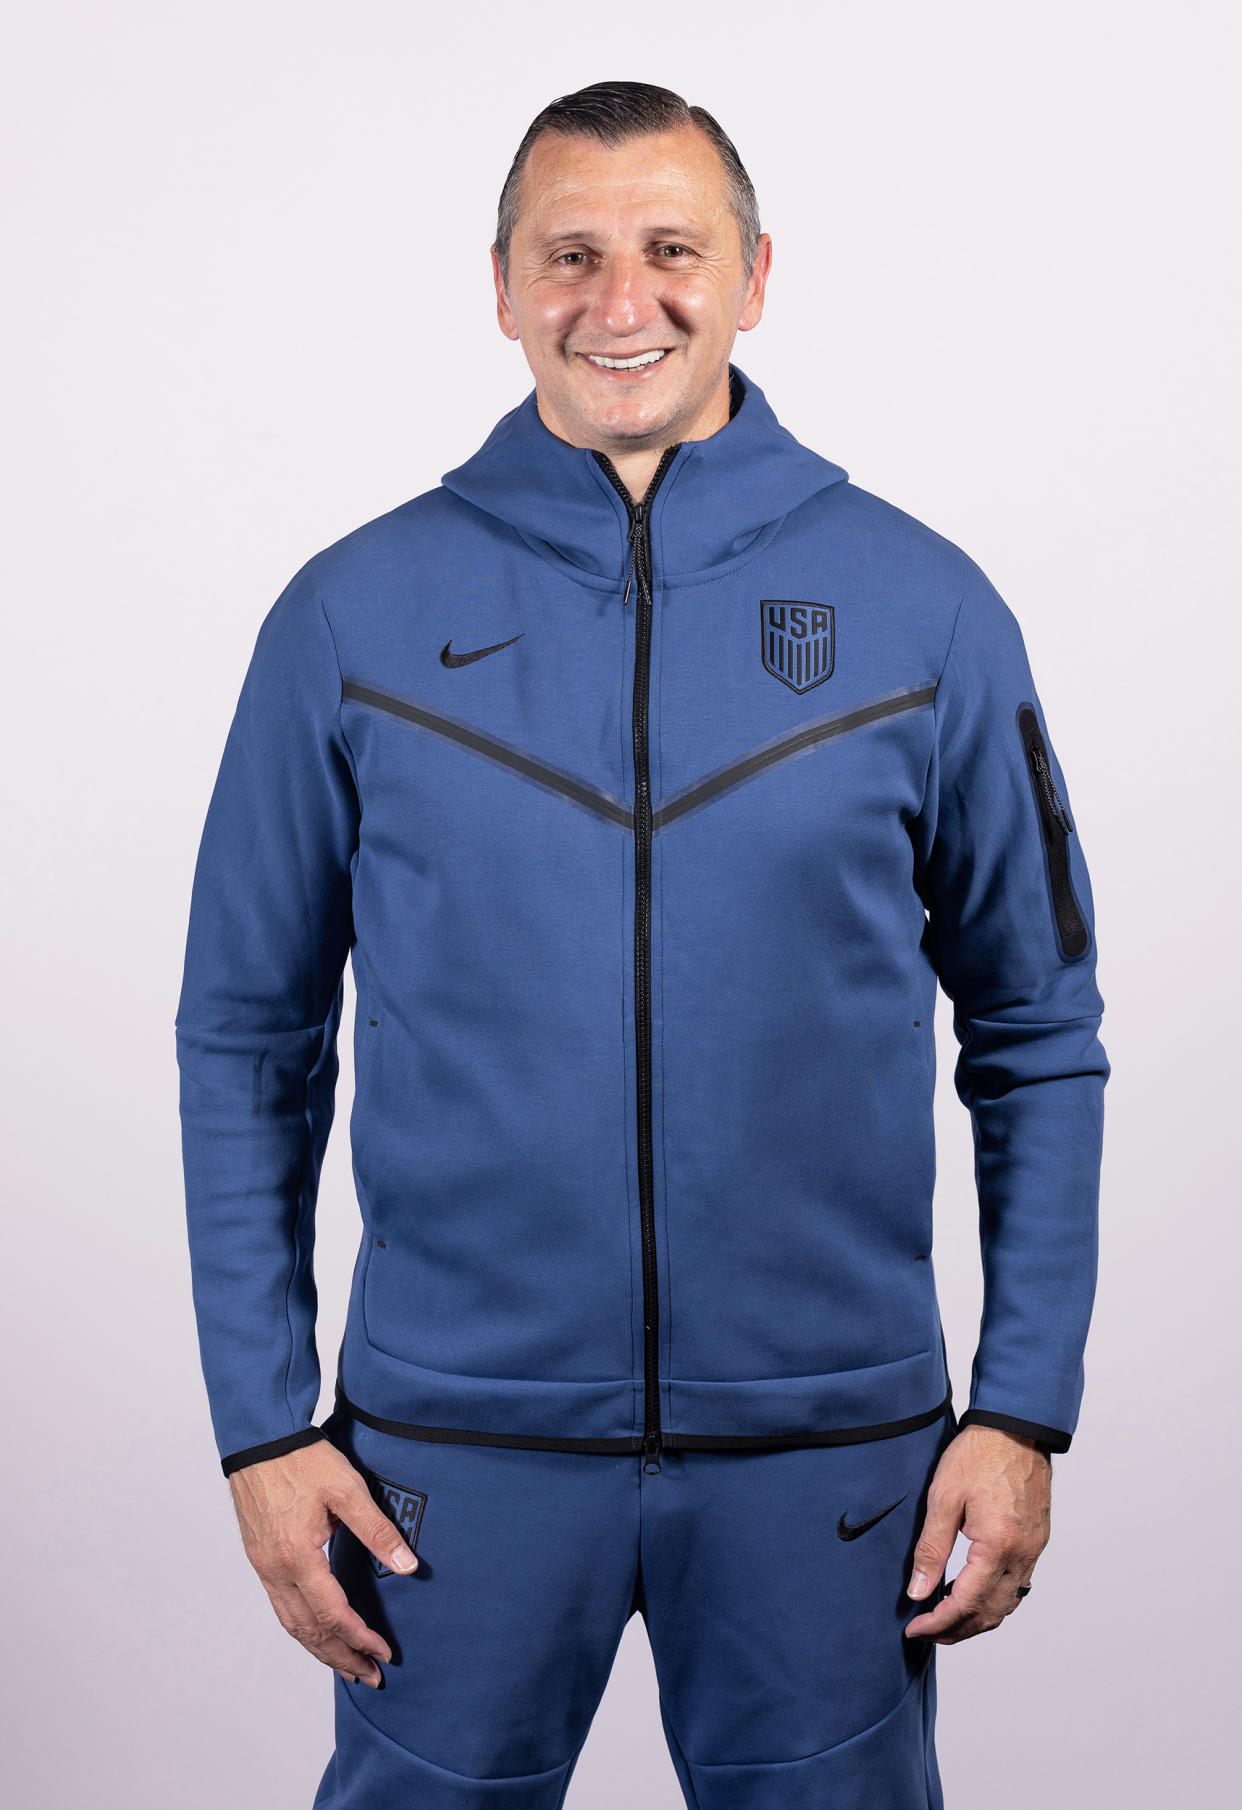 Vlatko Andonovski, head coach of 2023 World Cup USA women's national soccer team (Catherine Ivill / FIFA via Getty Images)